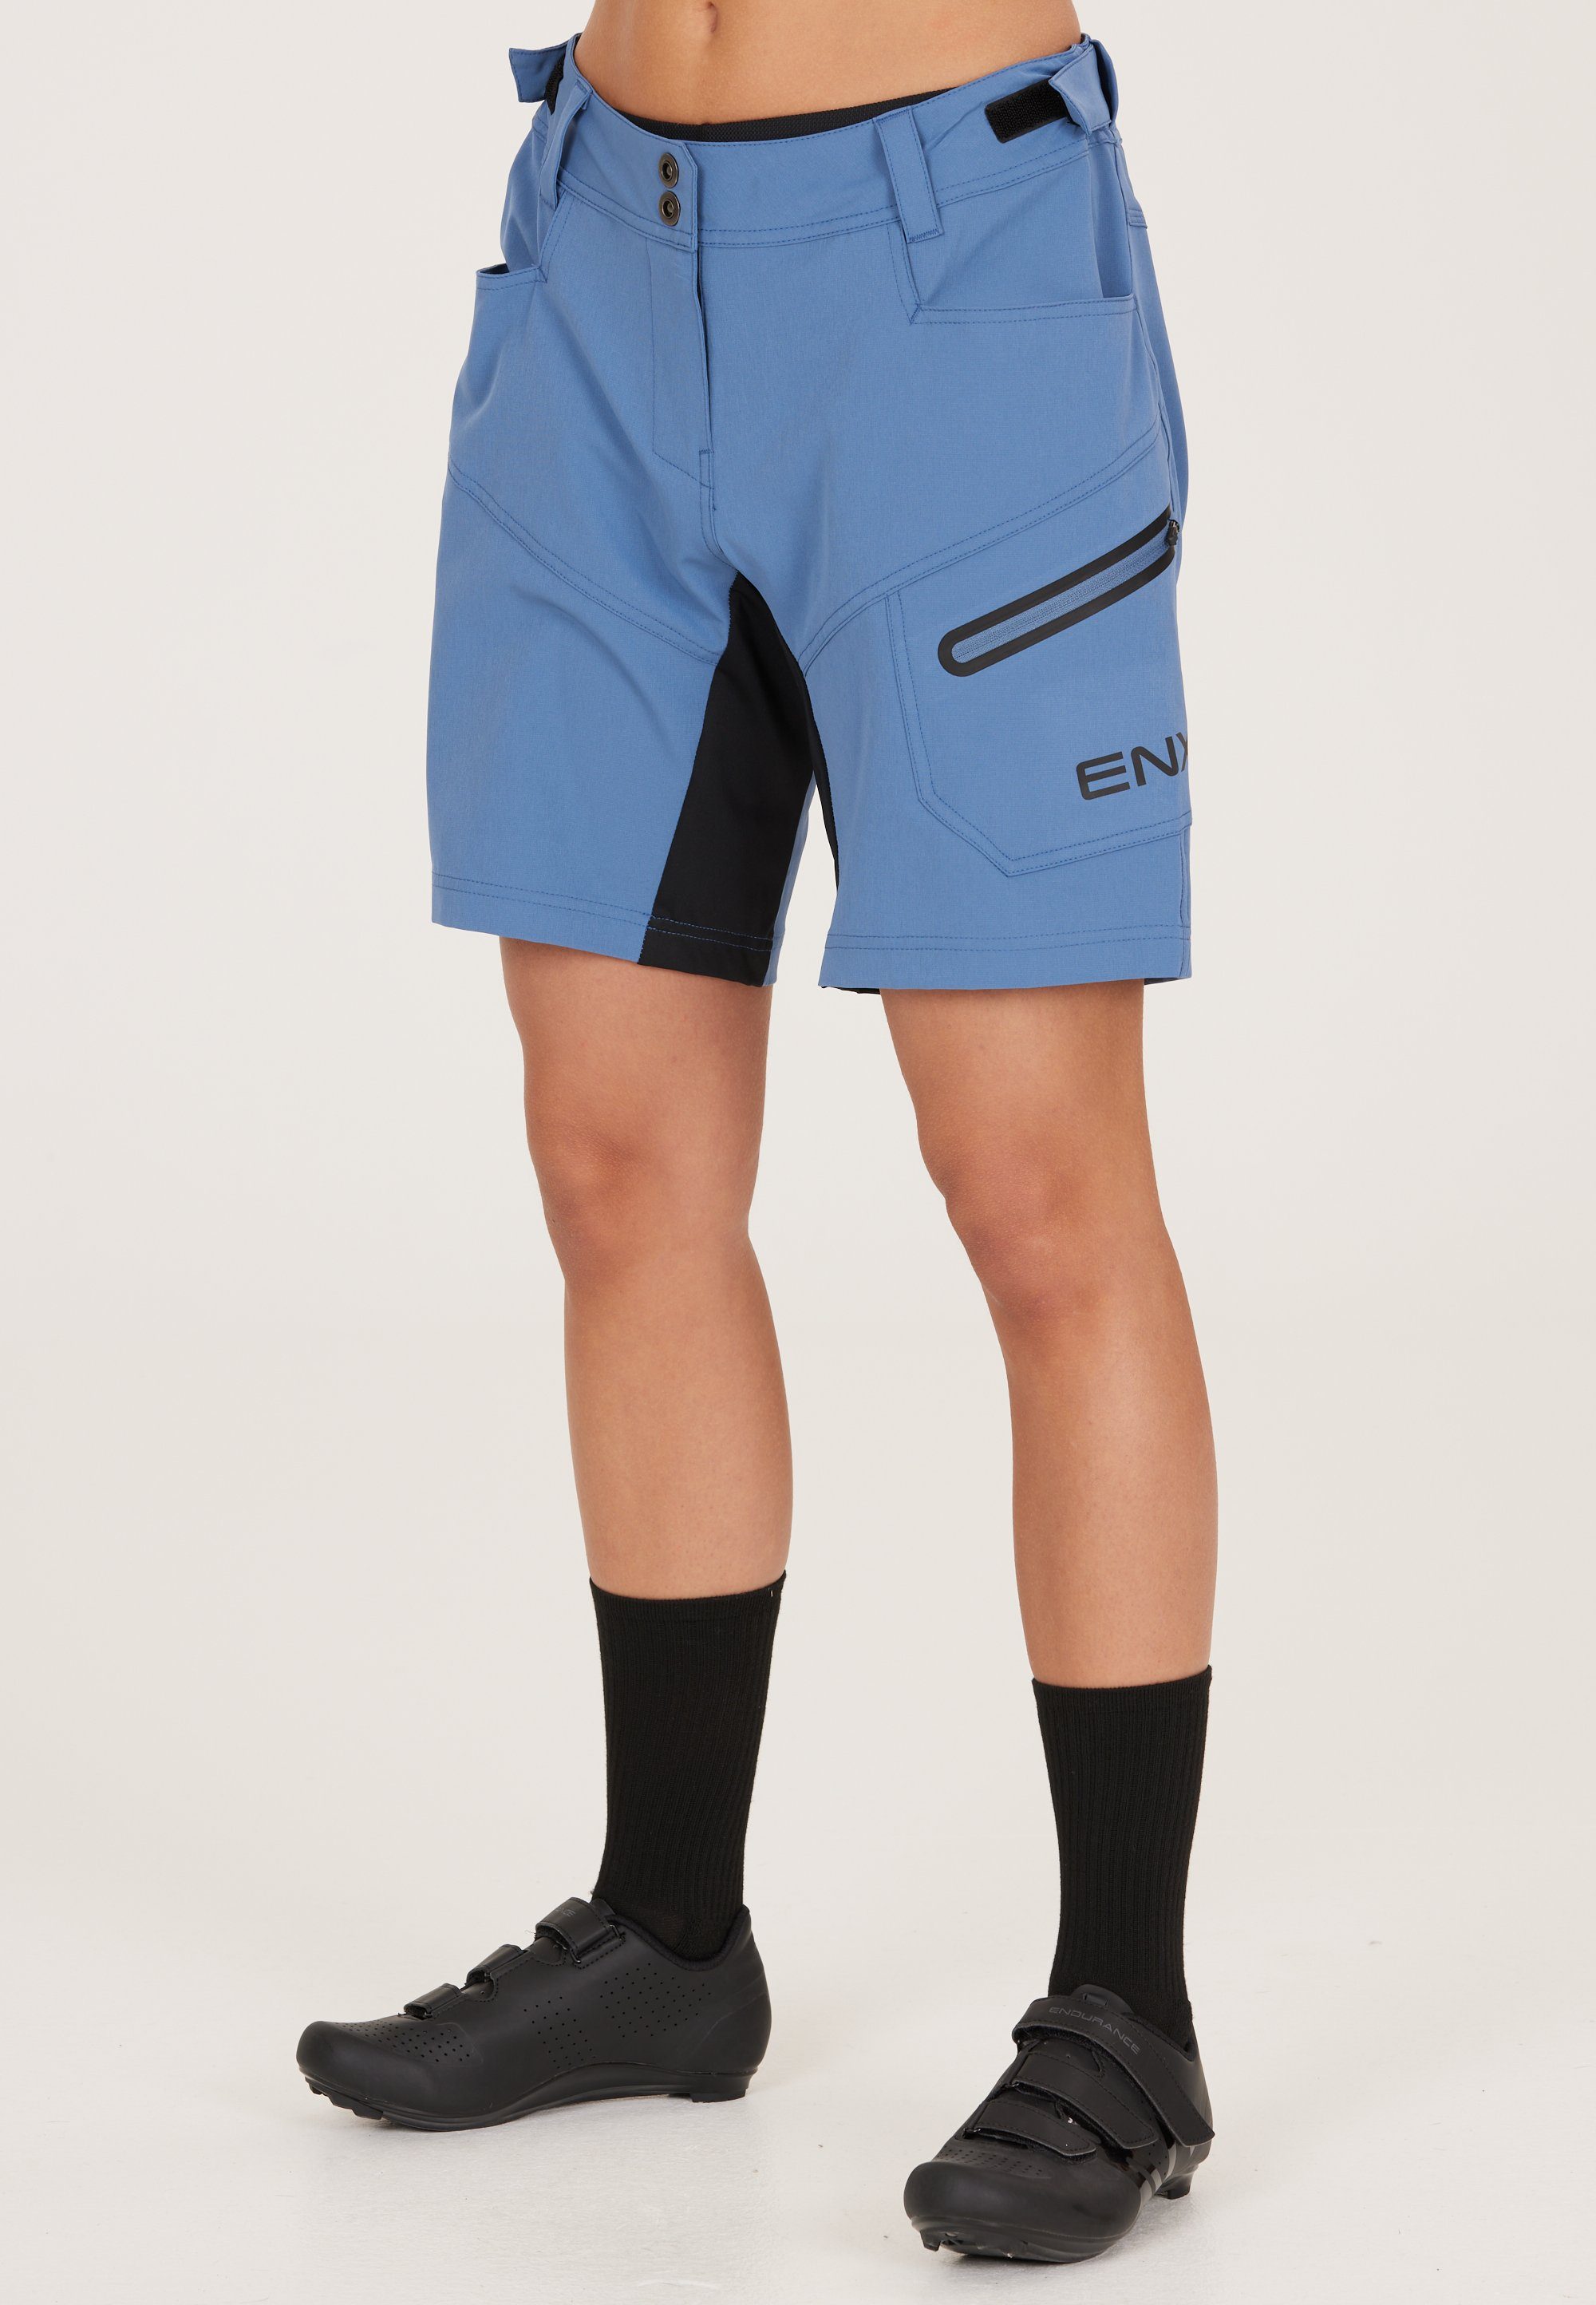 ENDURANCE Radhose Jamilla W 2 in 1 Shorts mit herausnehmbarer Innen-Tights blau | Fahrradhosen